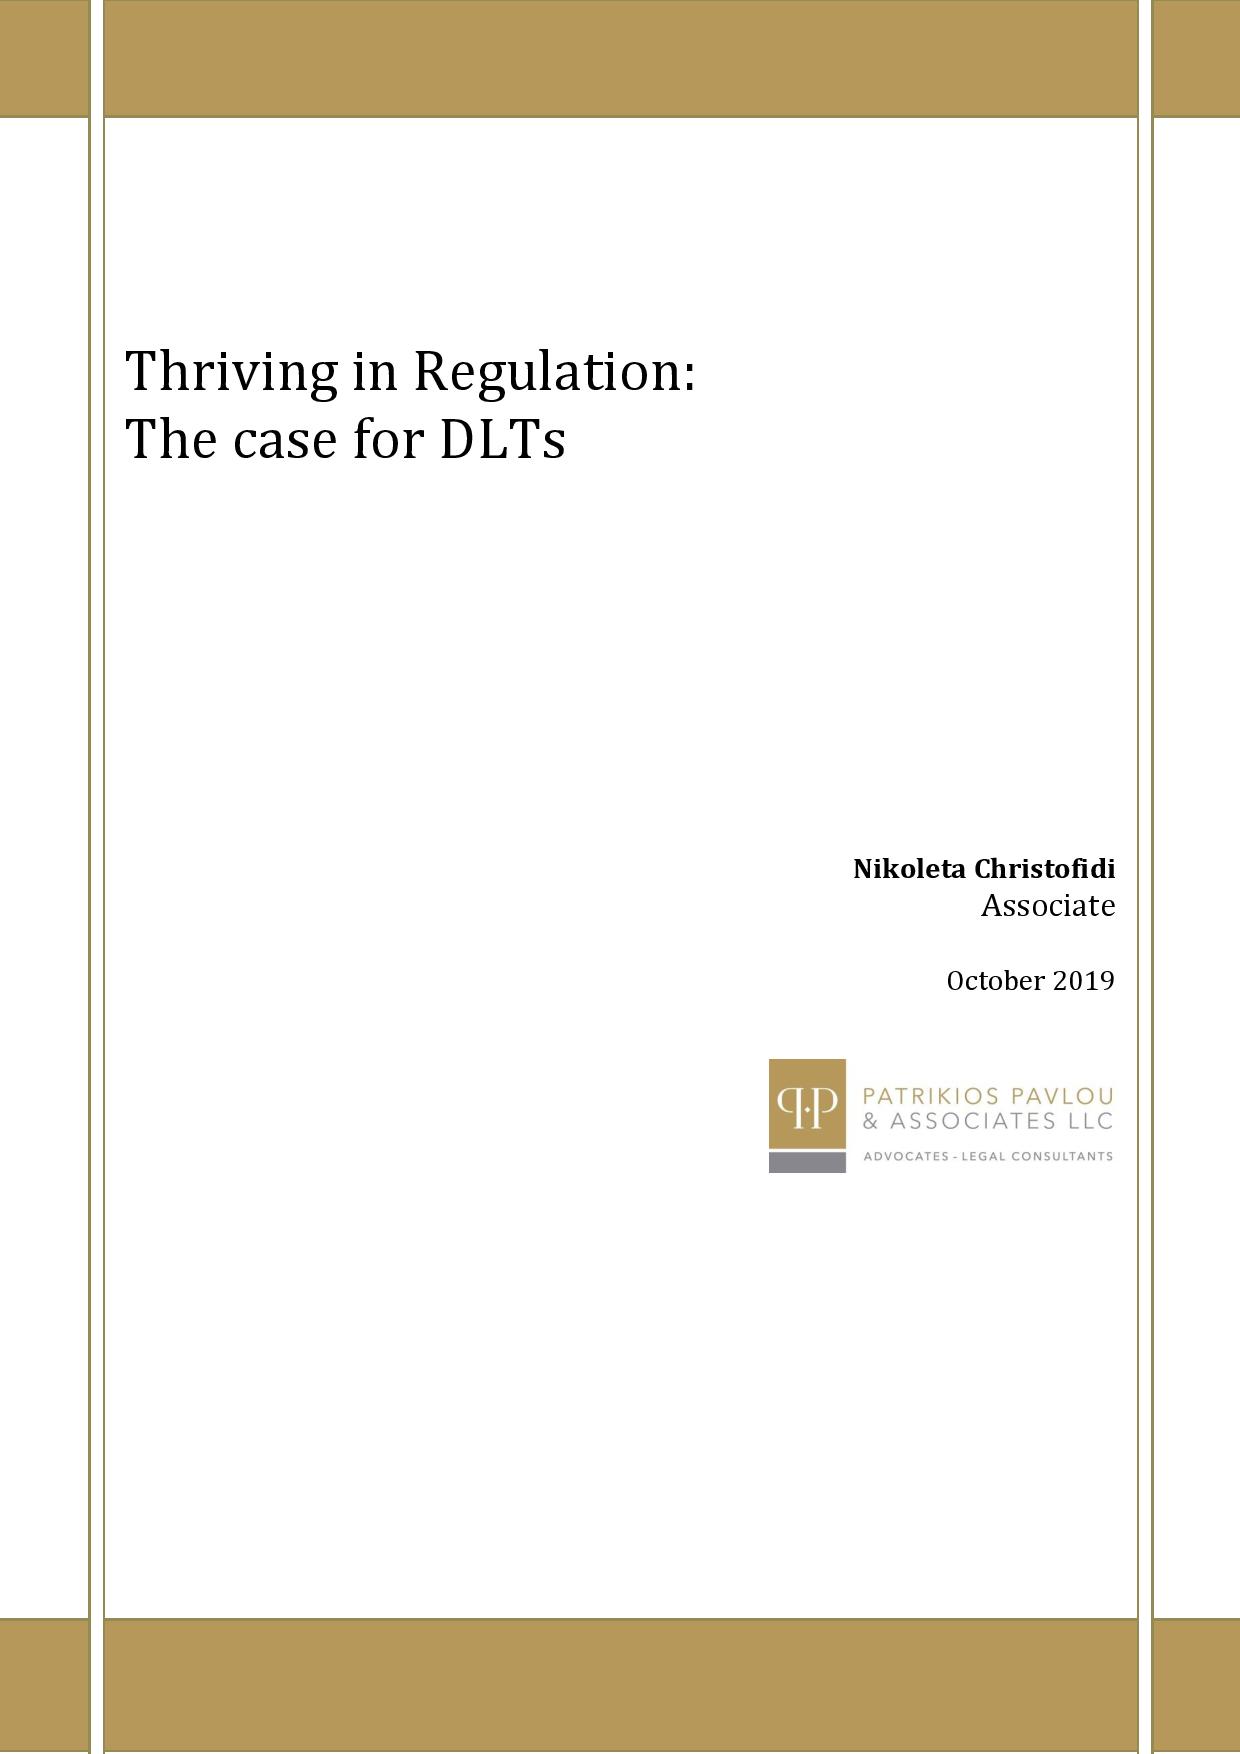 Patrikios Pavlou & Associates LLC: Thriving in Regulation: The case for DLTs